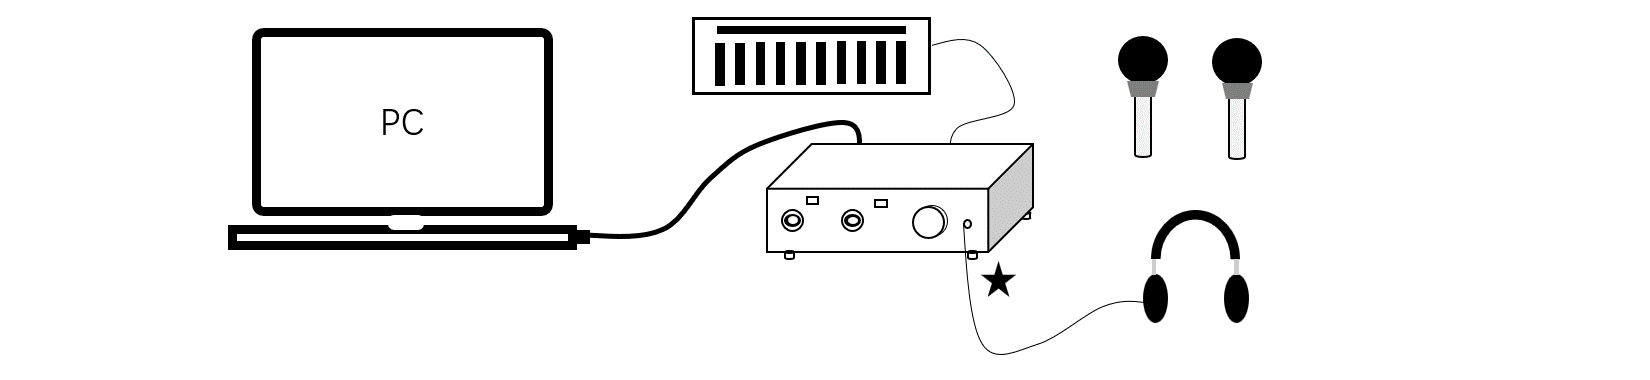 application of XMOS USB PRO sound card